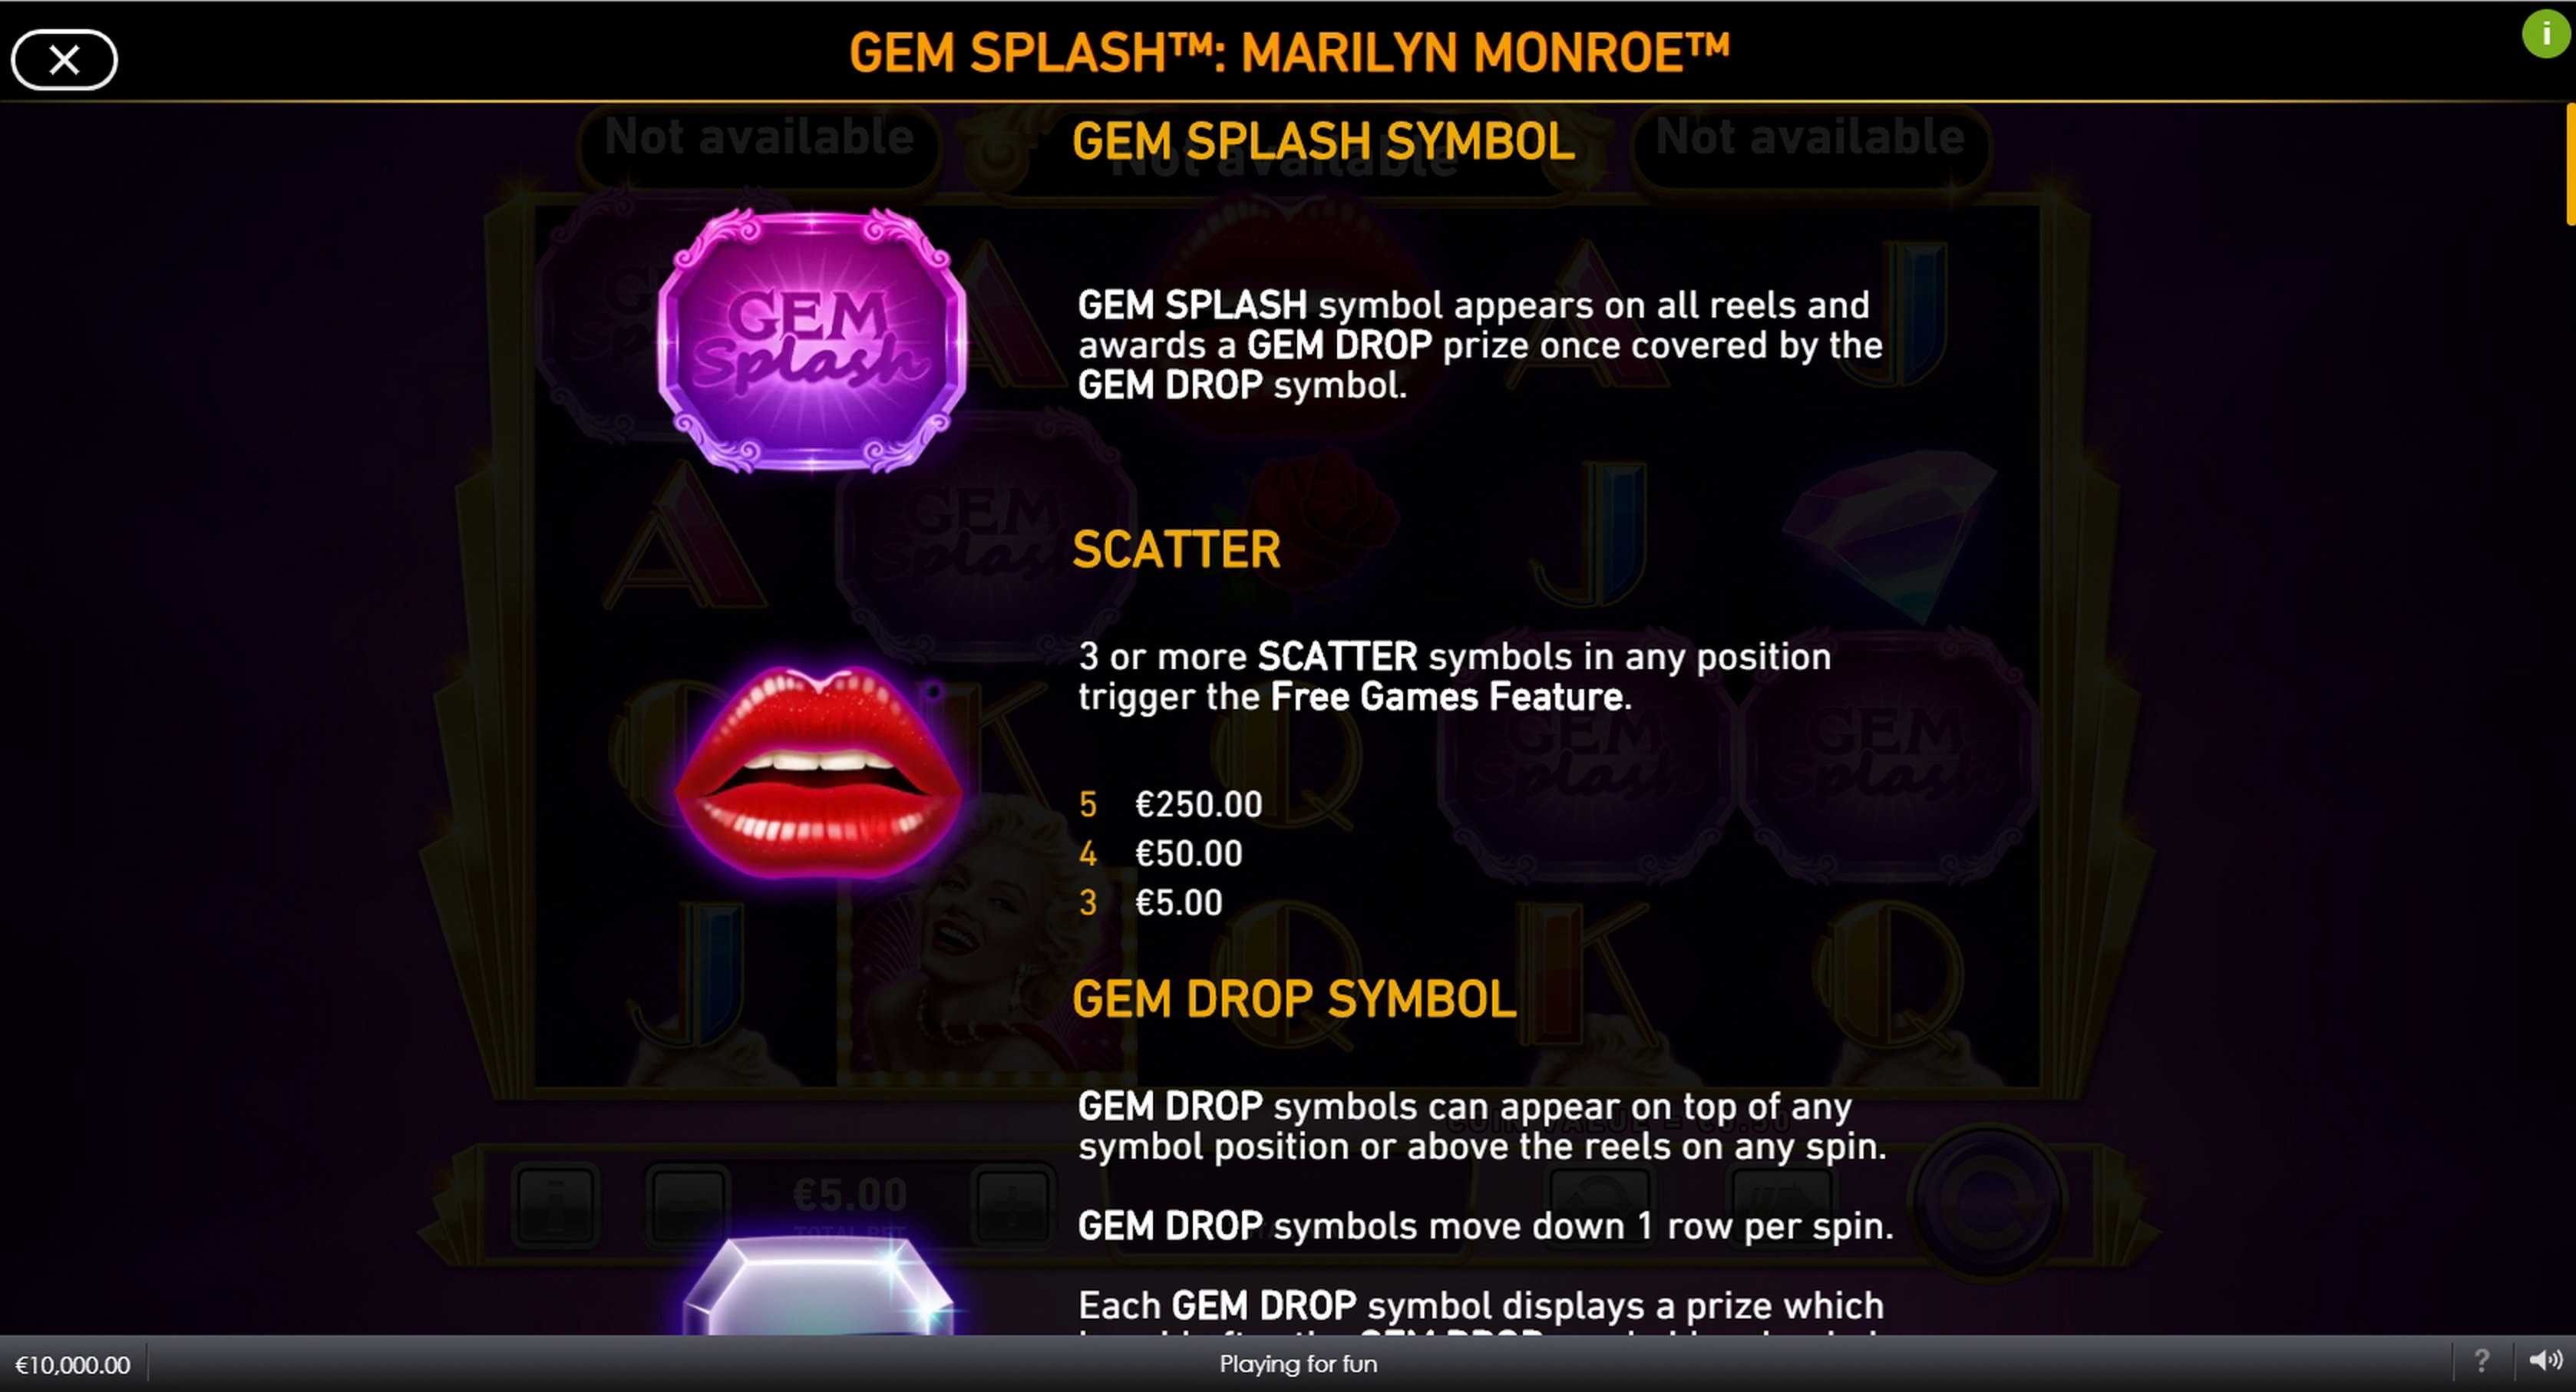 Info of Gem Splash Marilyn Monroe Slot Game by Rarestone Gaming